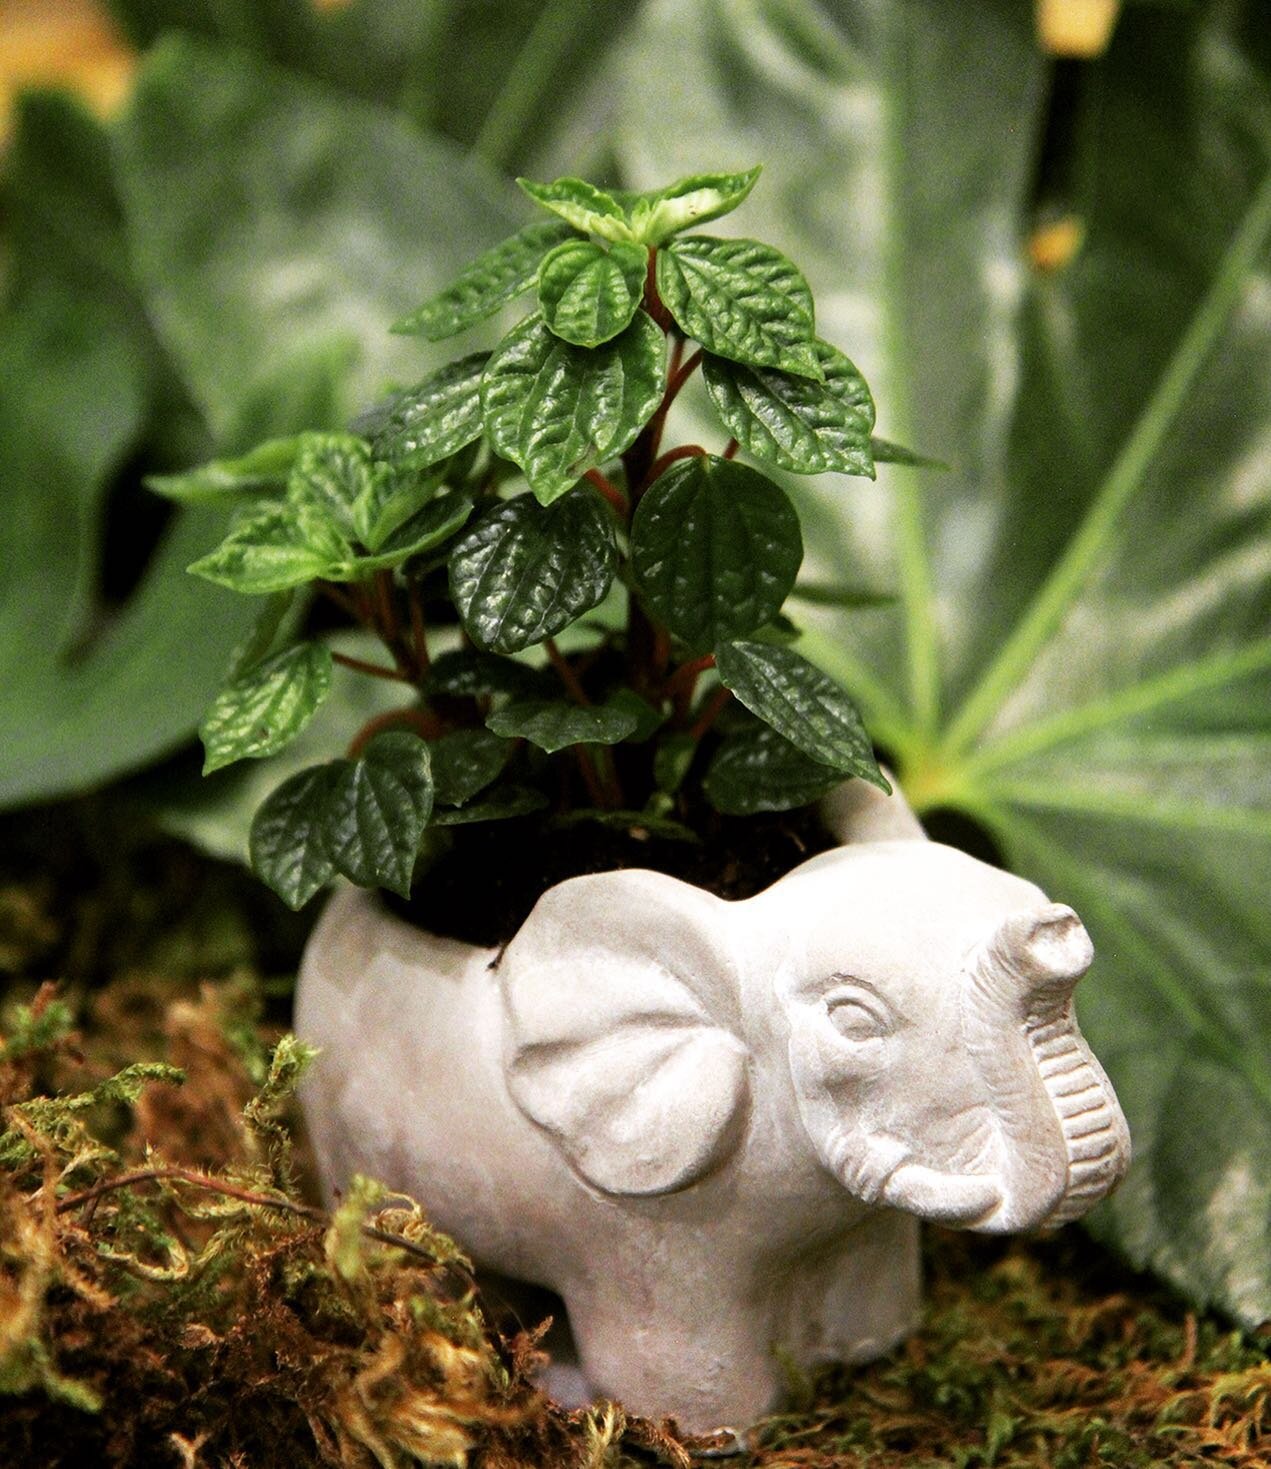 This little elephant planter has to be the cutest thing ever!!! 🐘 
.
.
#banff #banffflorist #banffmountaintopflowers #banffplants #banffplantshop #elephantplanter #floristsupply #banfflocals #shoplocal #jungleinthemaking